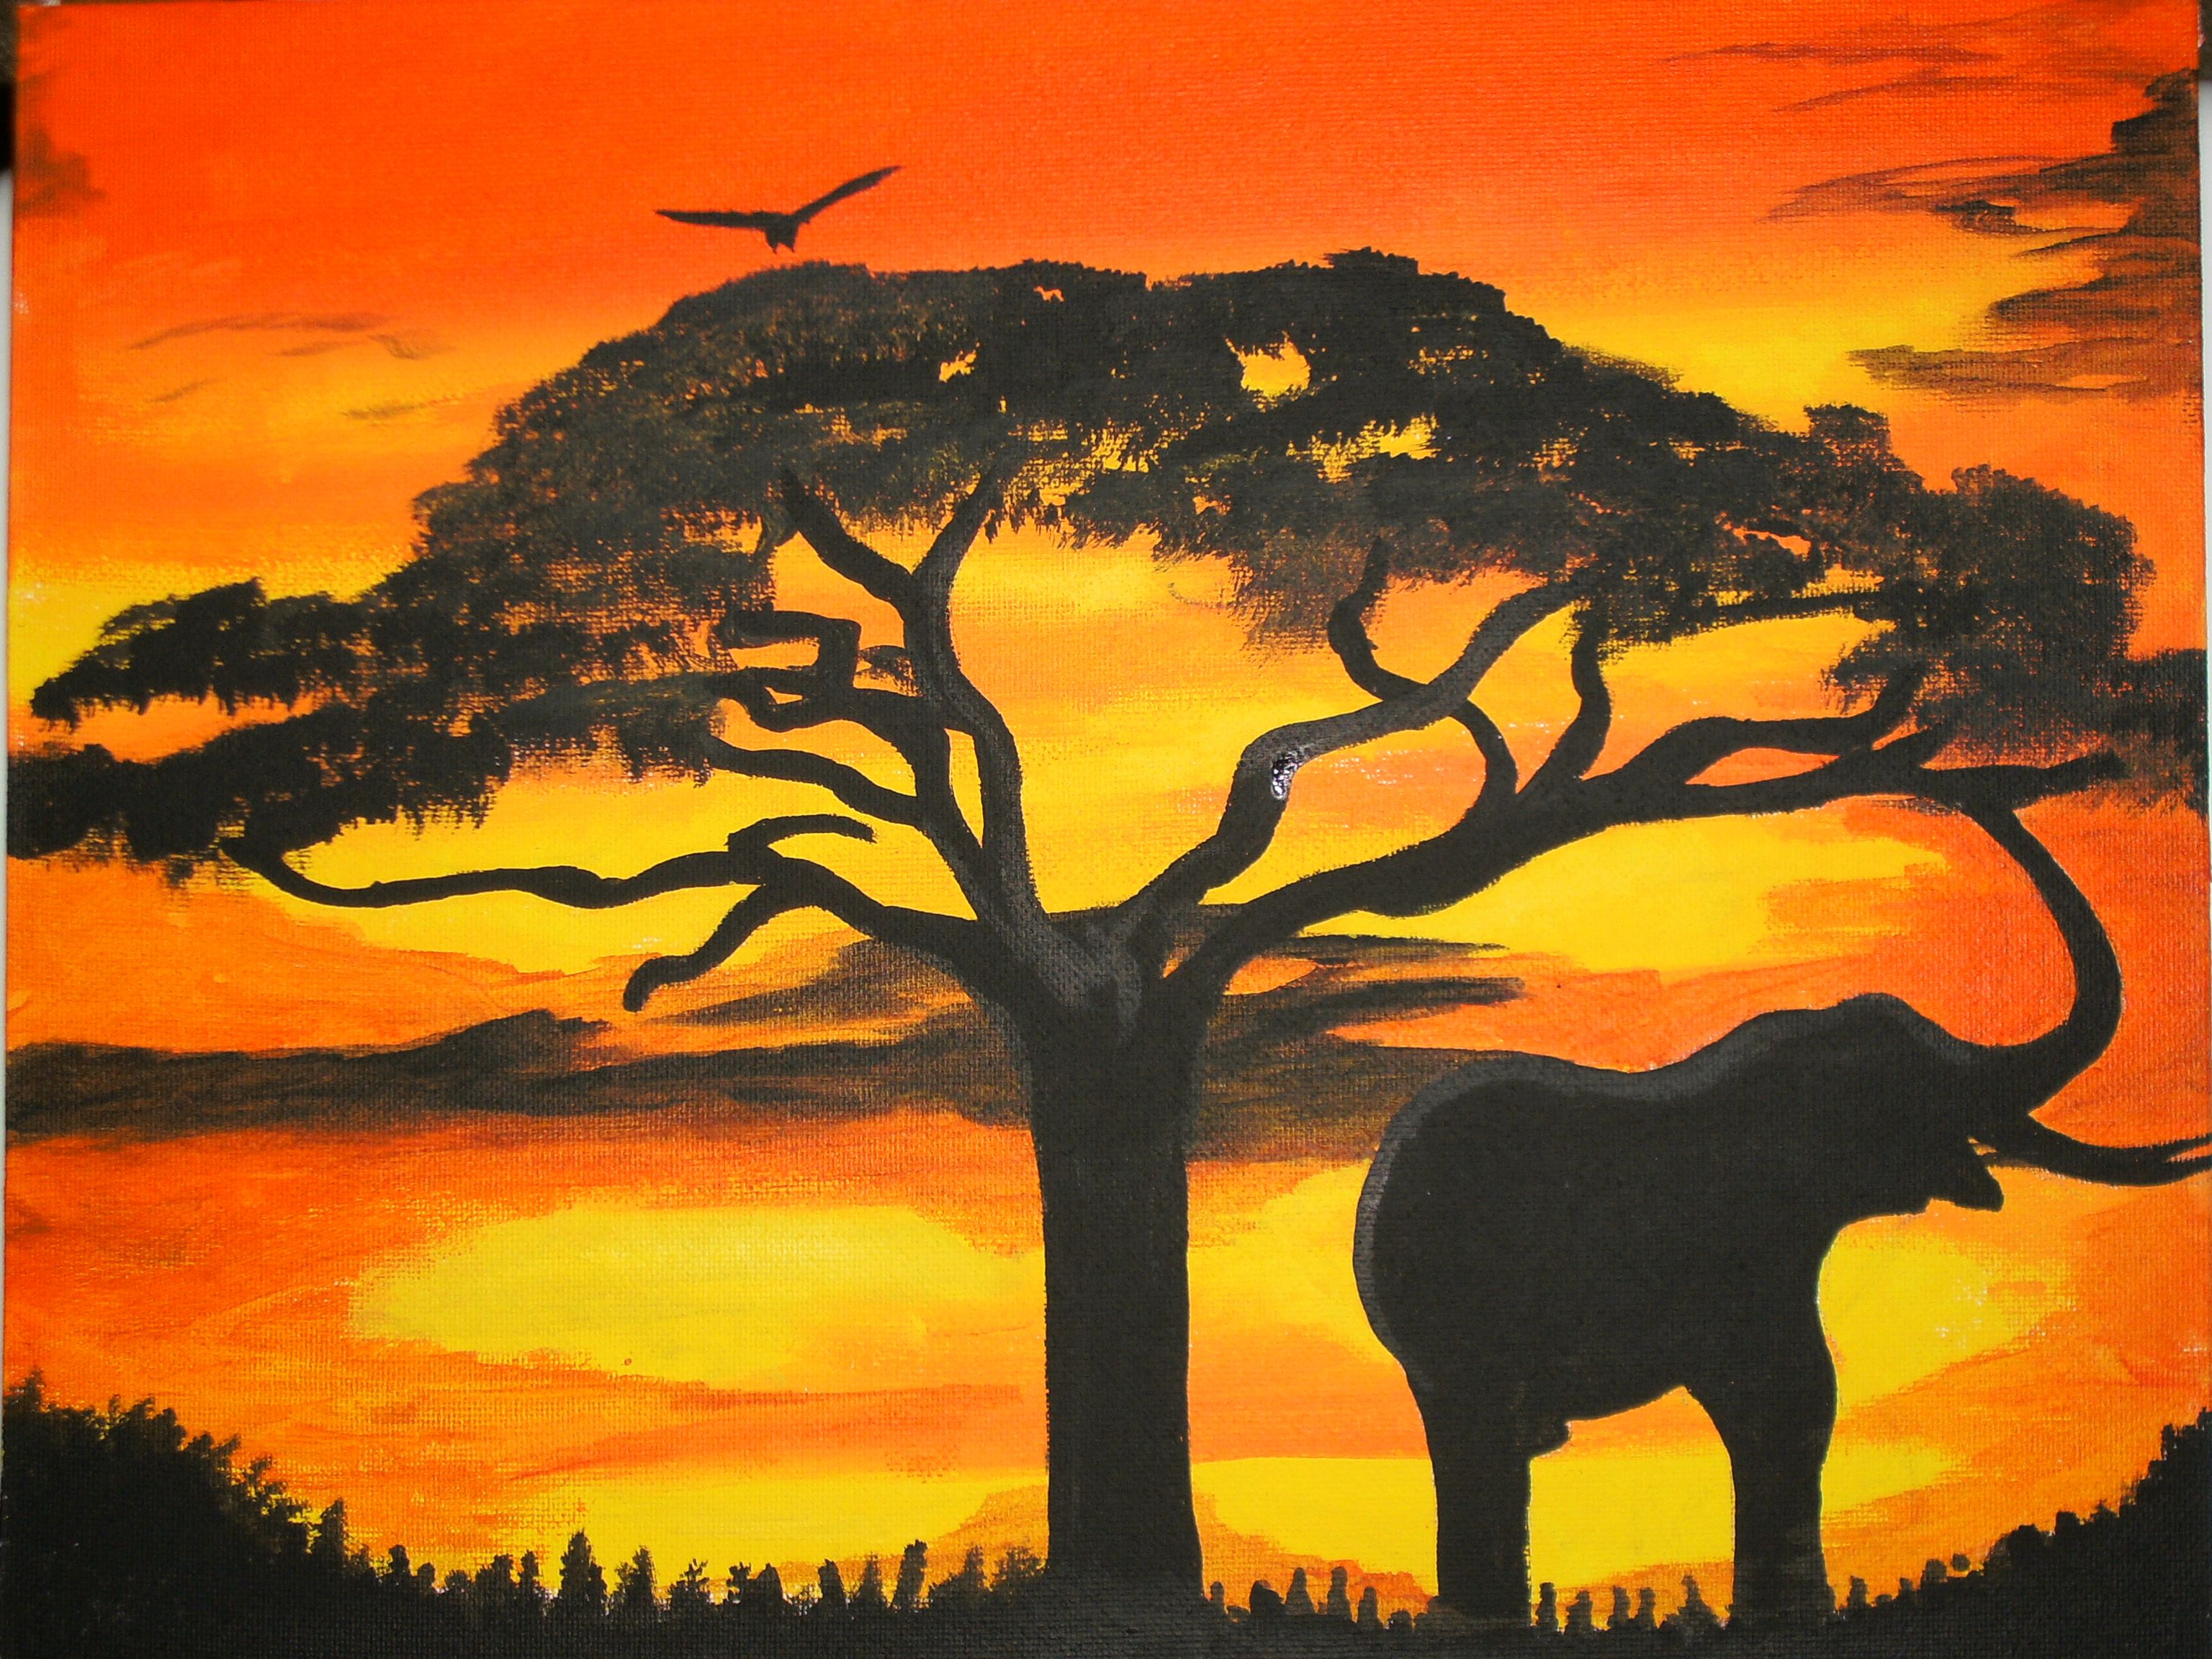 papel tapiz de temática africana,elefante,fauna silvestre,elefantes y mamuts,paisaje natural,elefante africano